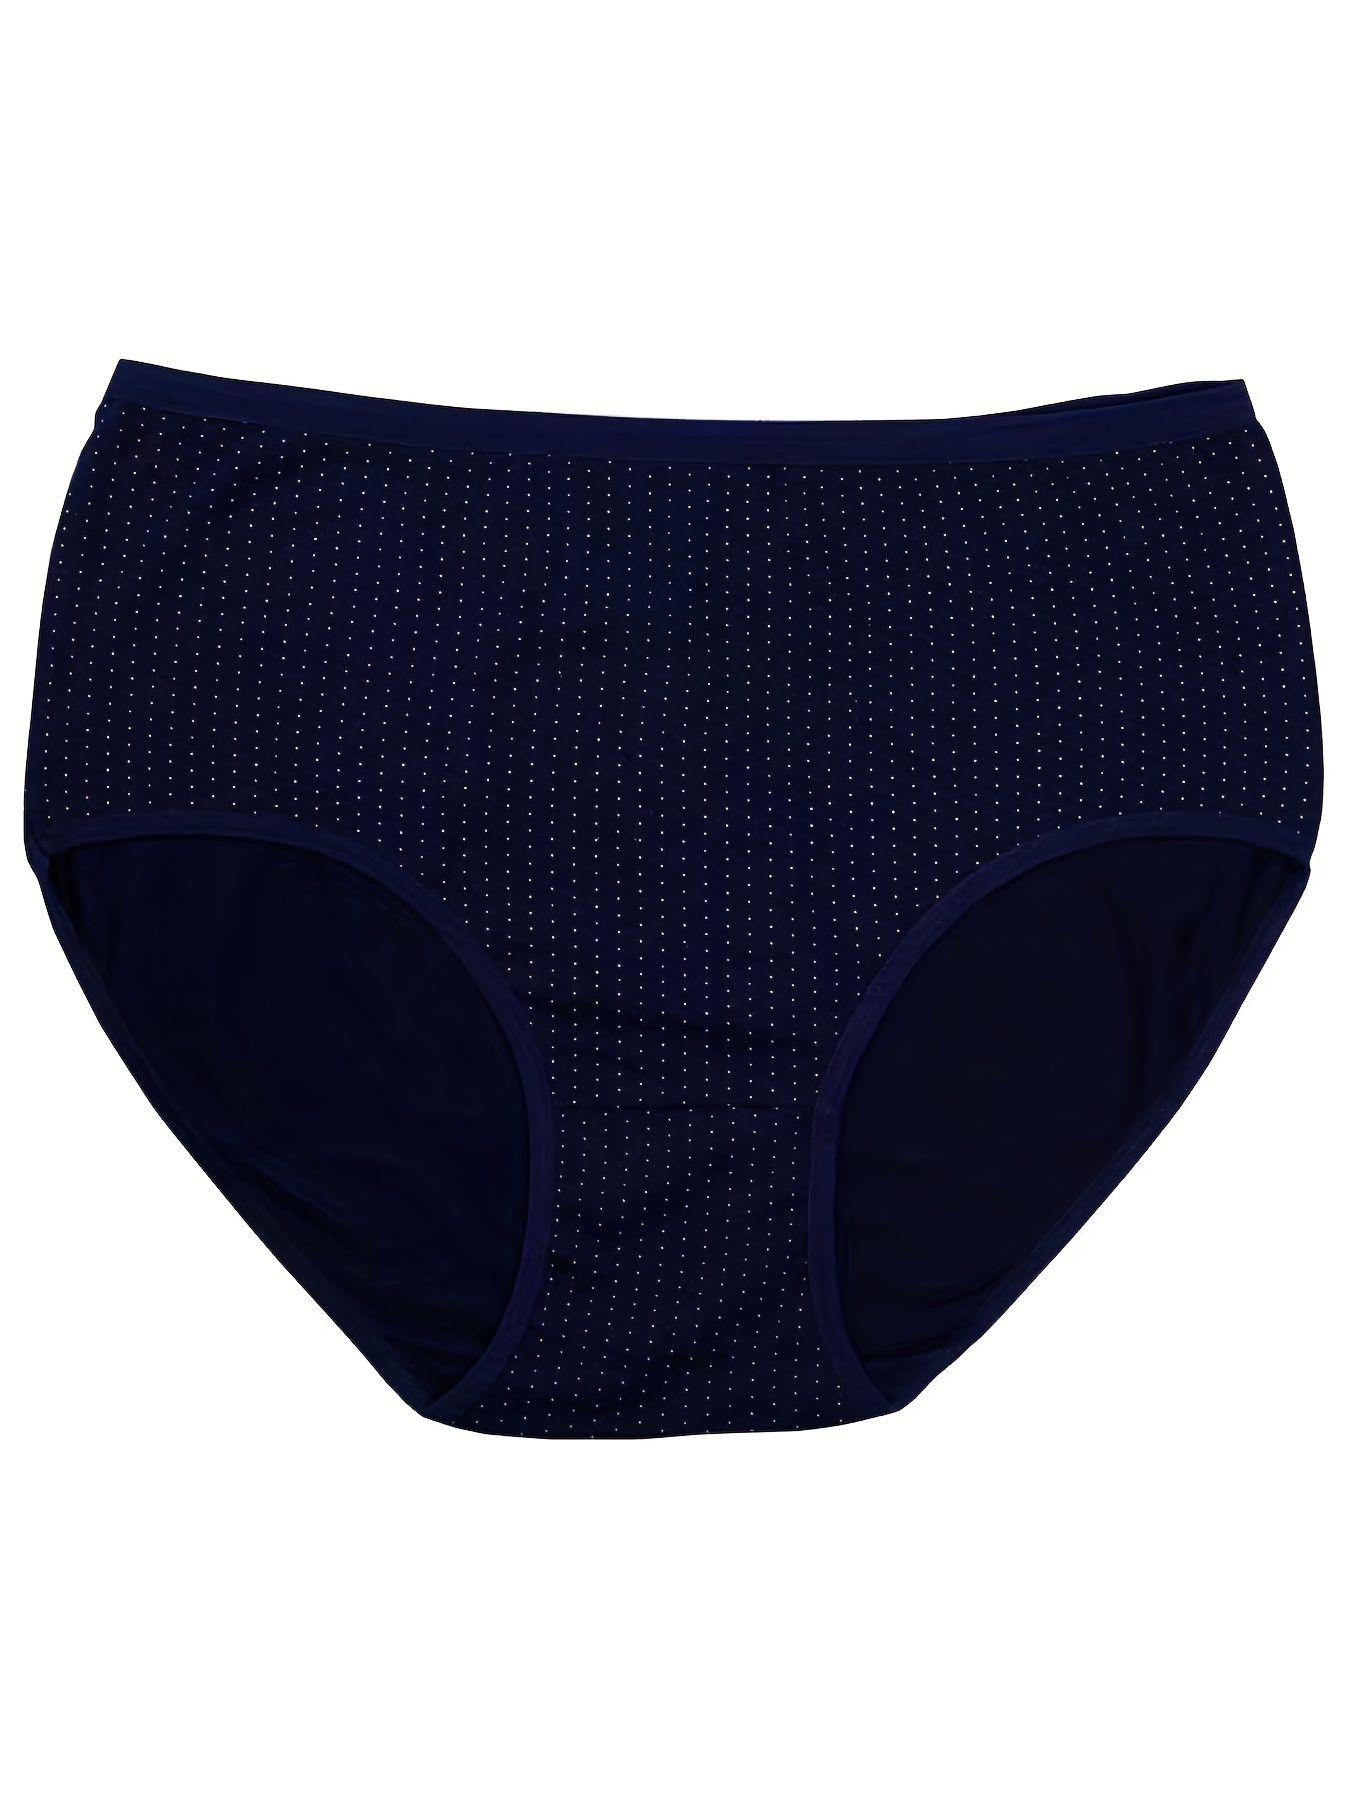 Pin on Panties/ Undergarment's for Women